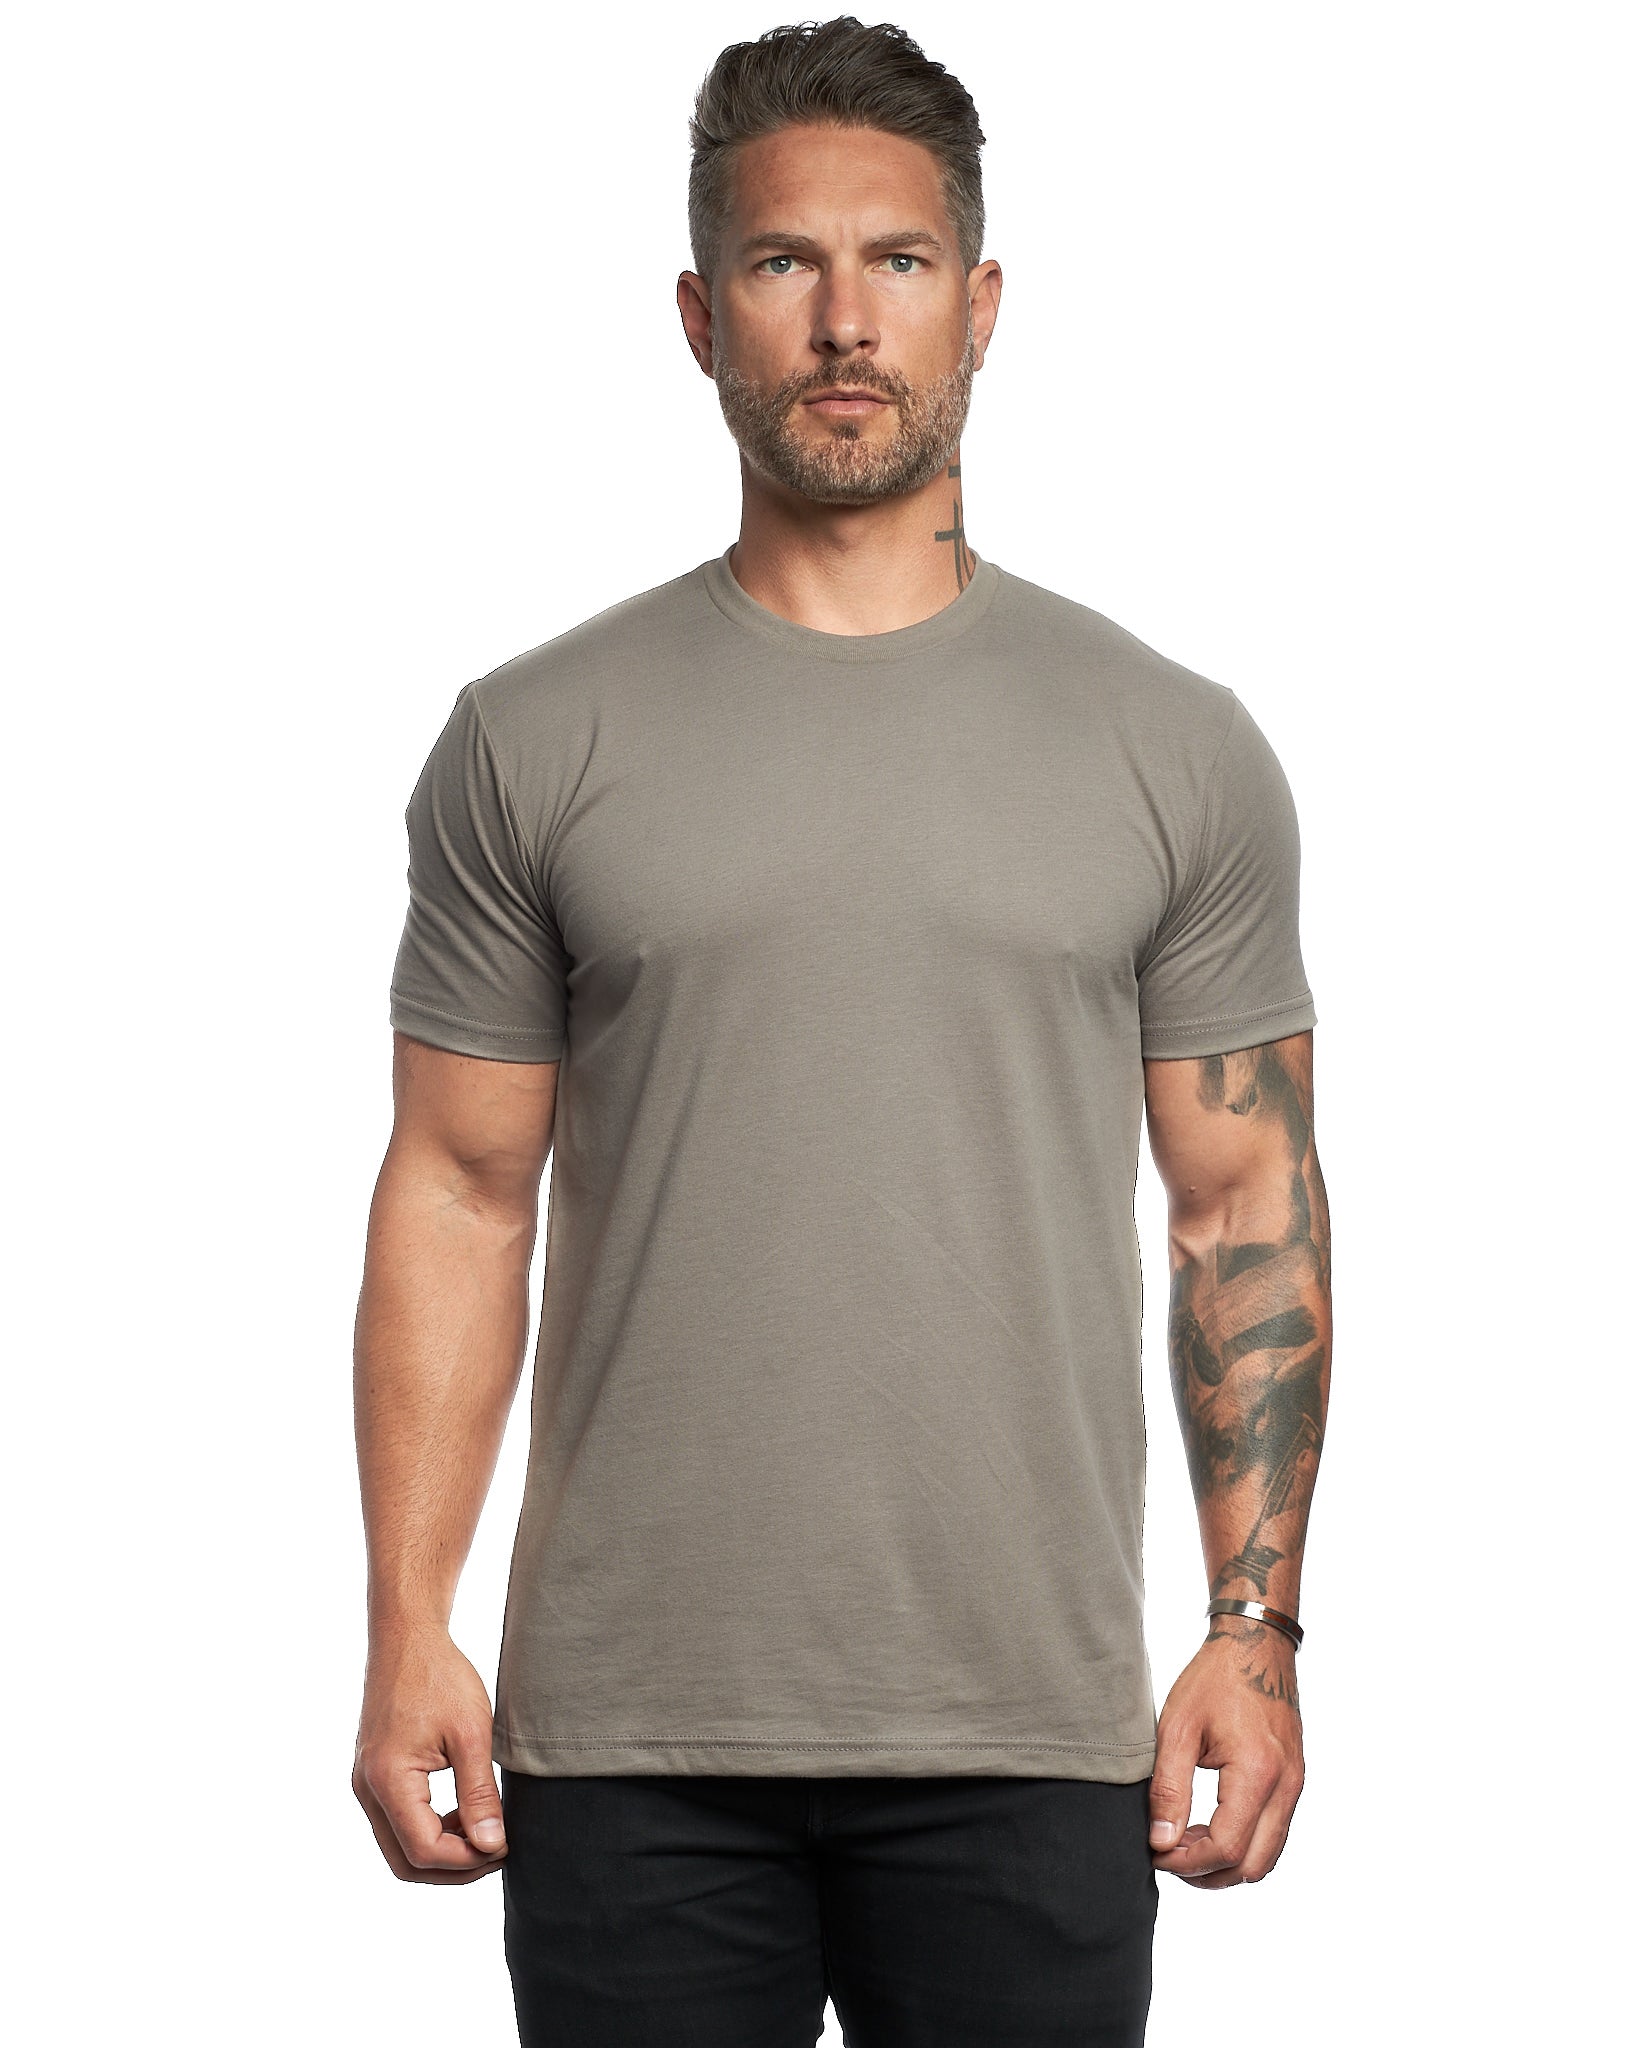 The Ultra Soft Fitted Crew Neck T-Shirt For Men – WESTON JON BOUCHÉR